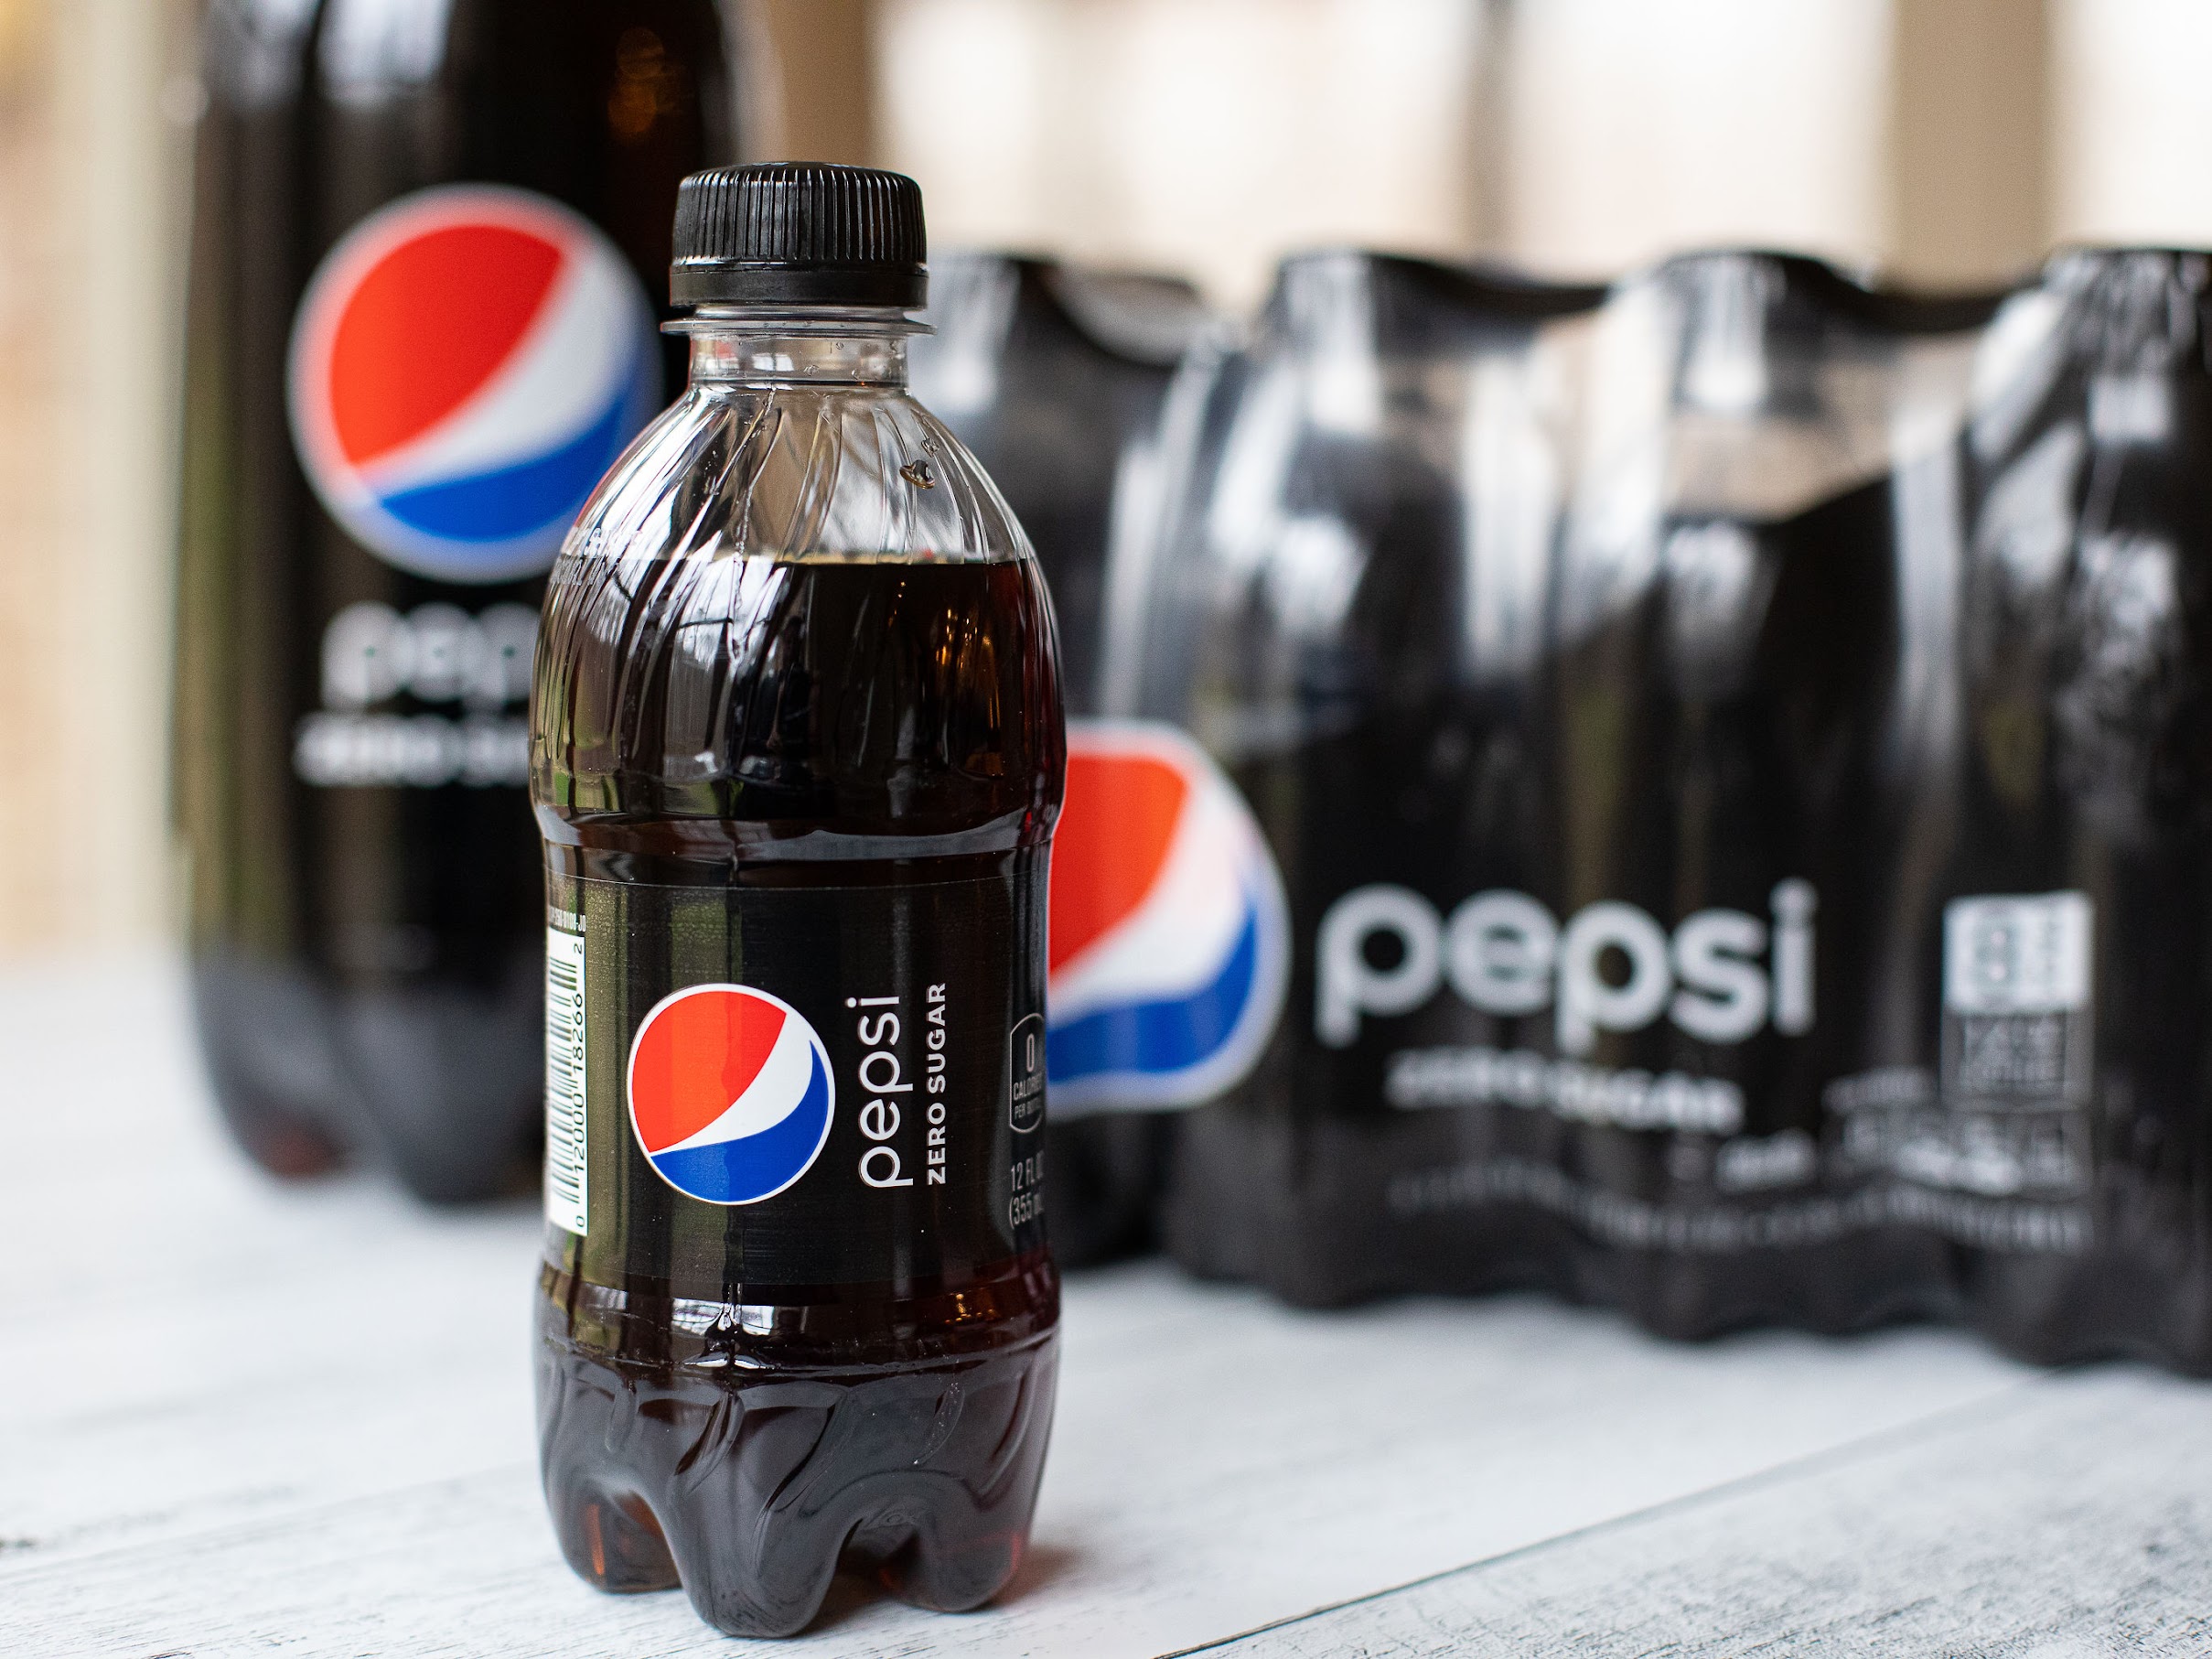 6 OR 8-Packs Of Pepsi Soda As Low As $3.40 At Publix (Regular Price $7.99)